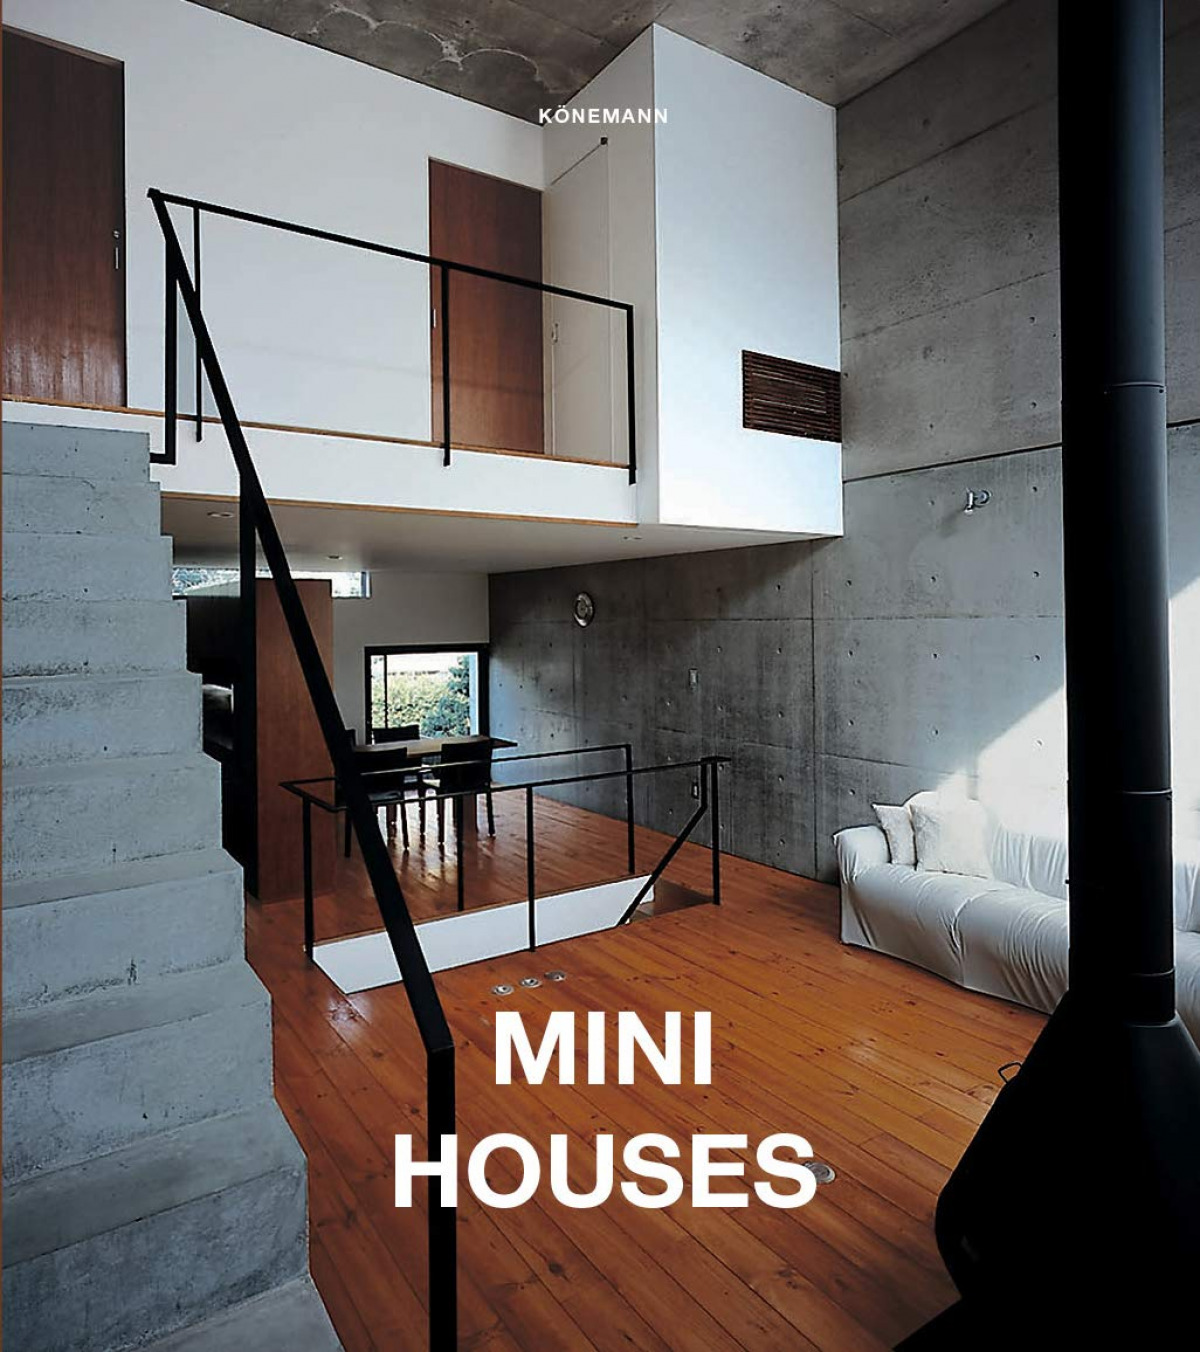 Mini houses - Aa.Vv